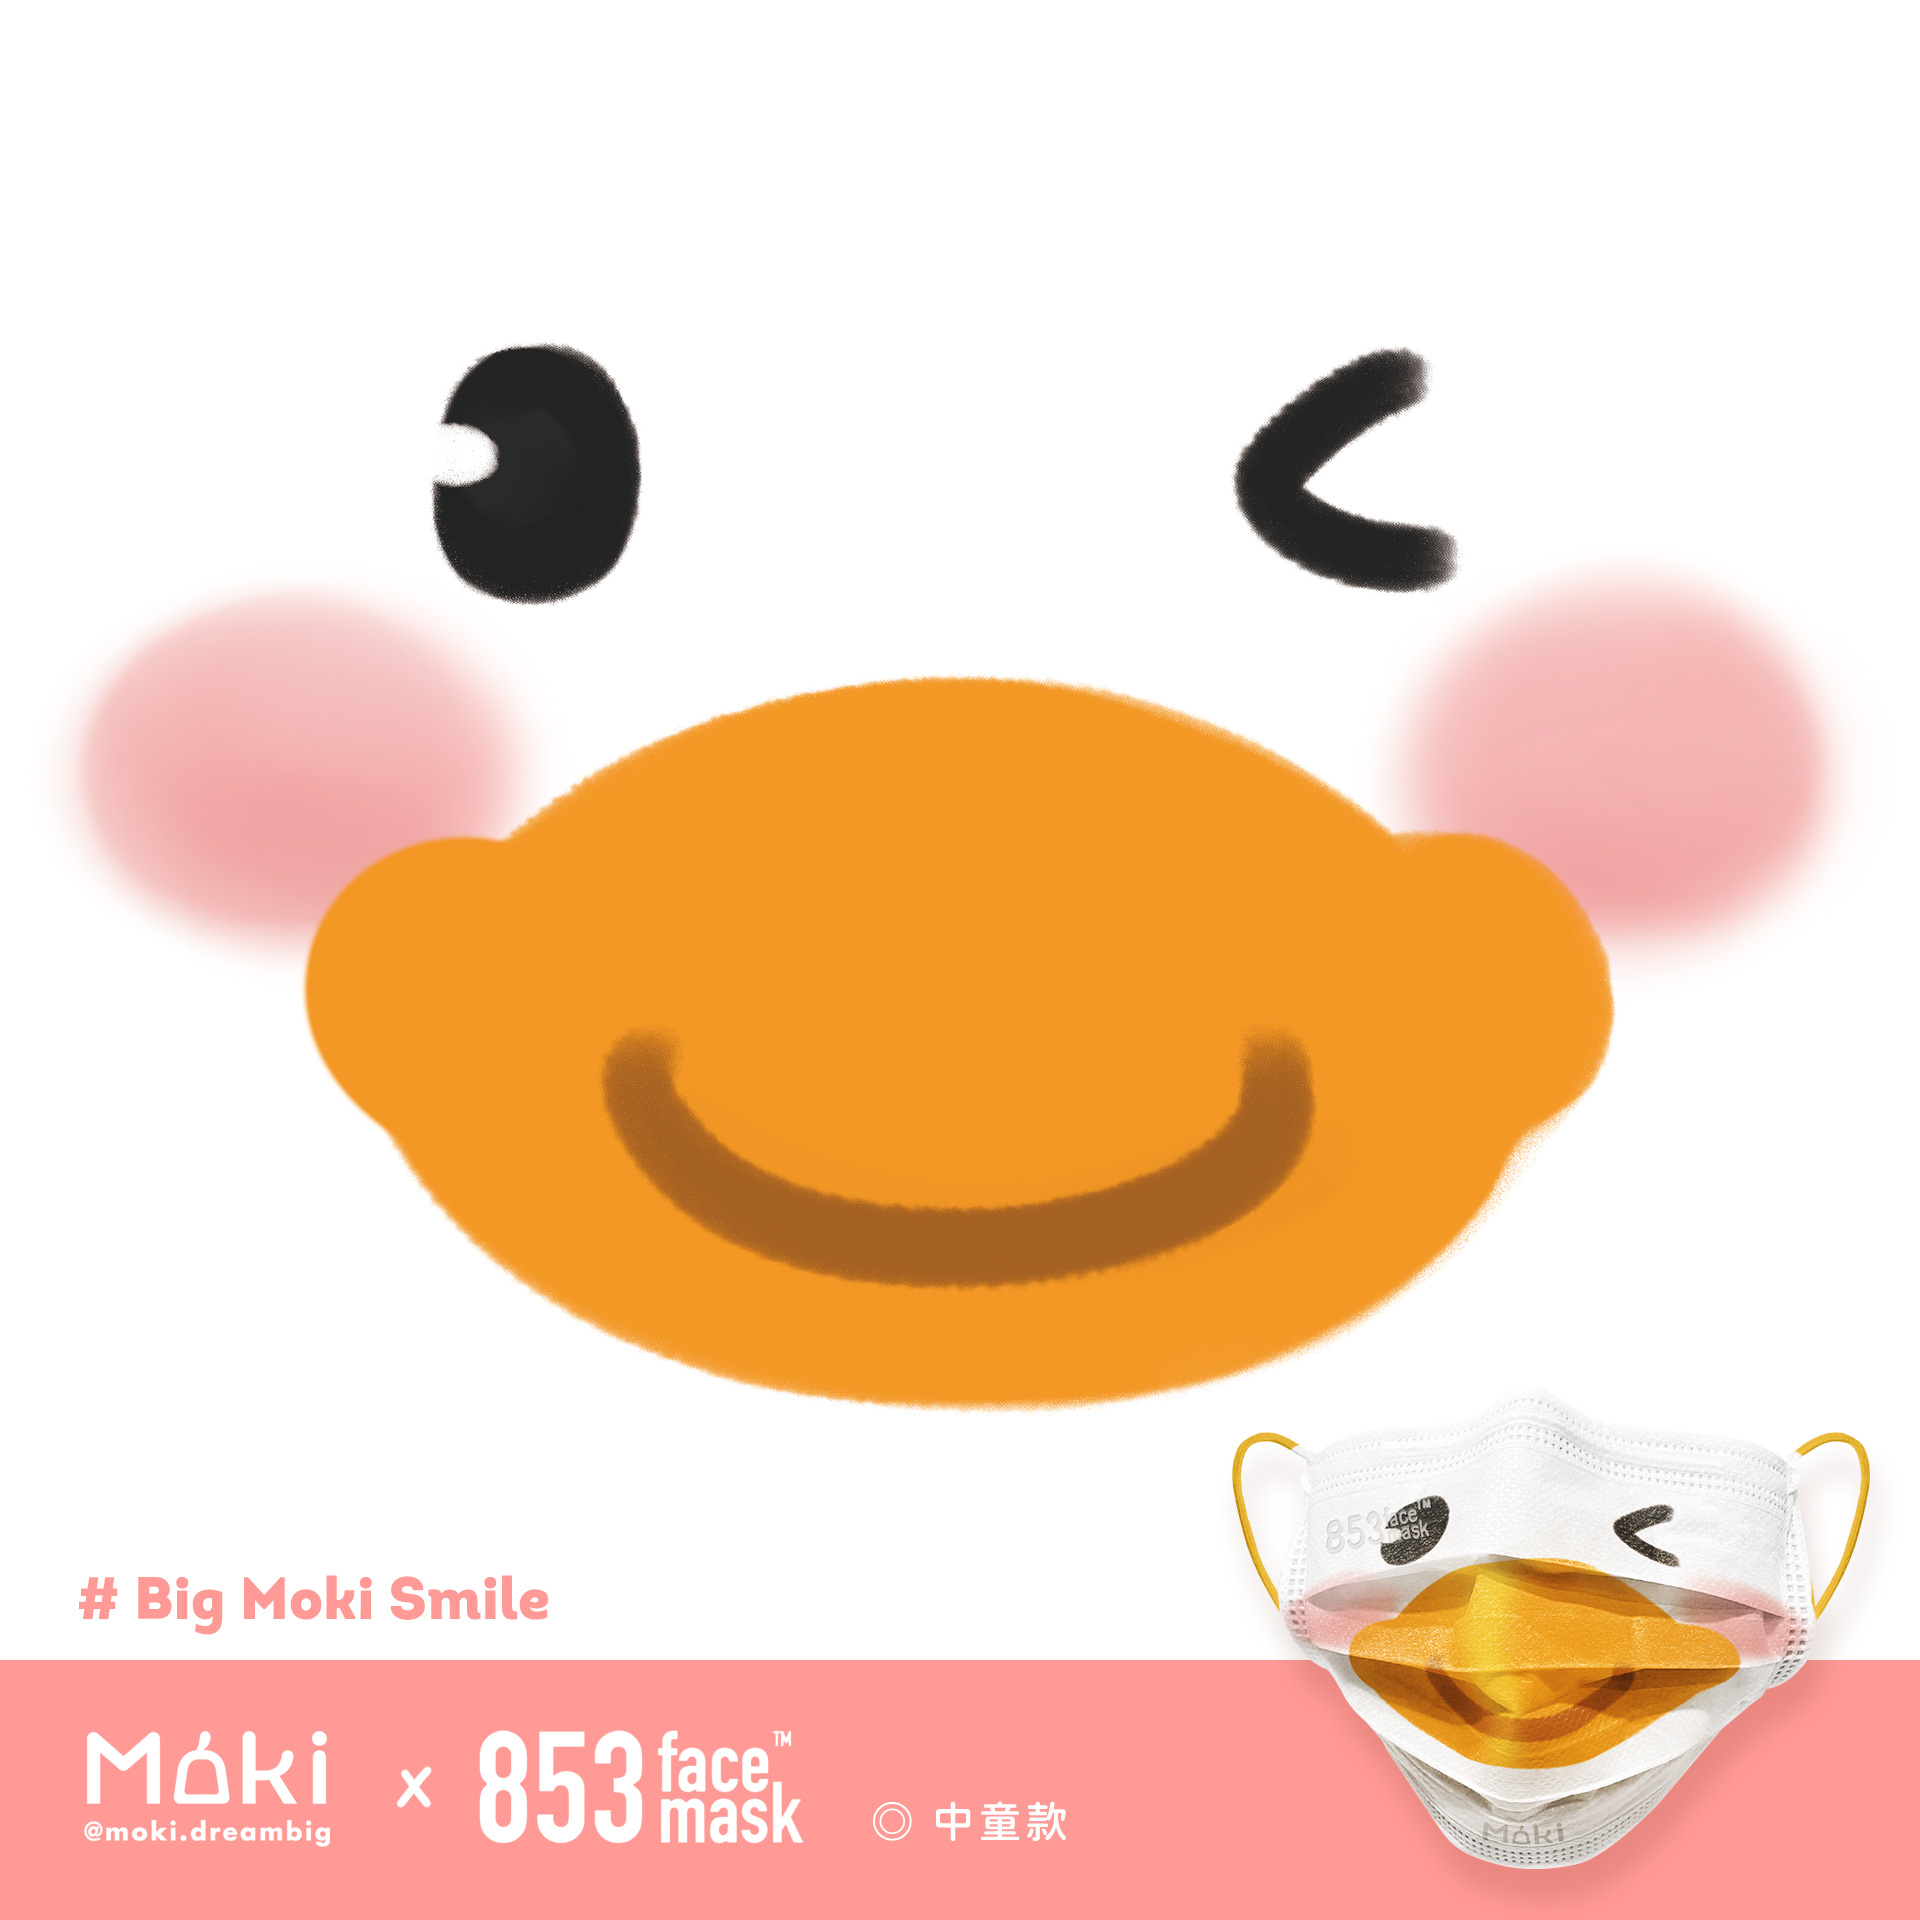 ASTM Level 3 145mm中童口罩（853 Face Mask™️ X moki.dreambig) Big Moki Smile 非獨立包裝10片